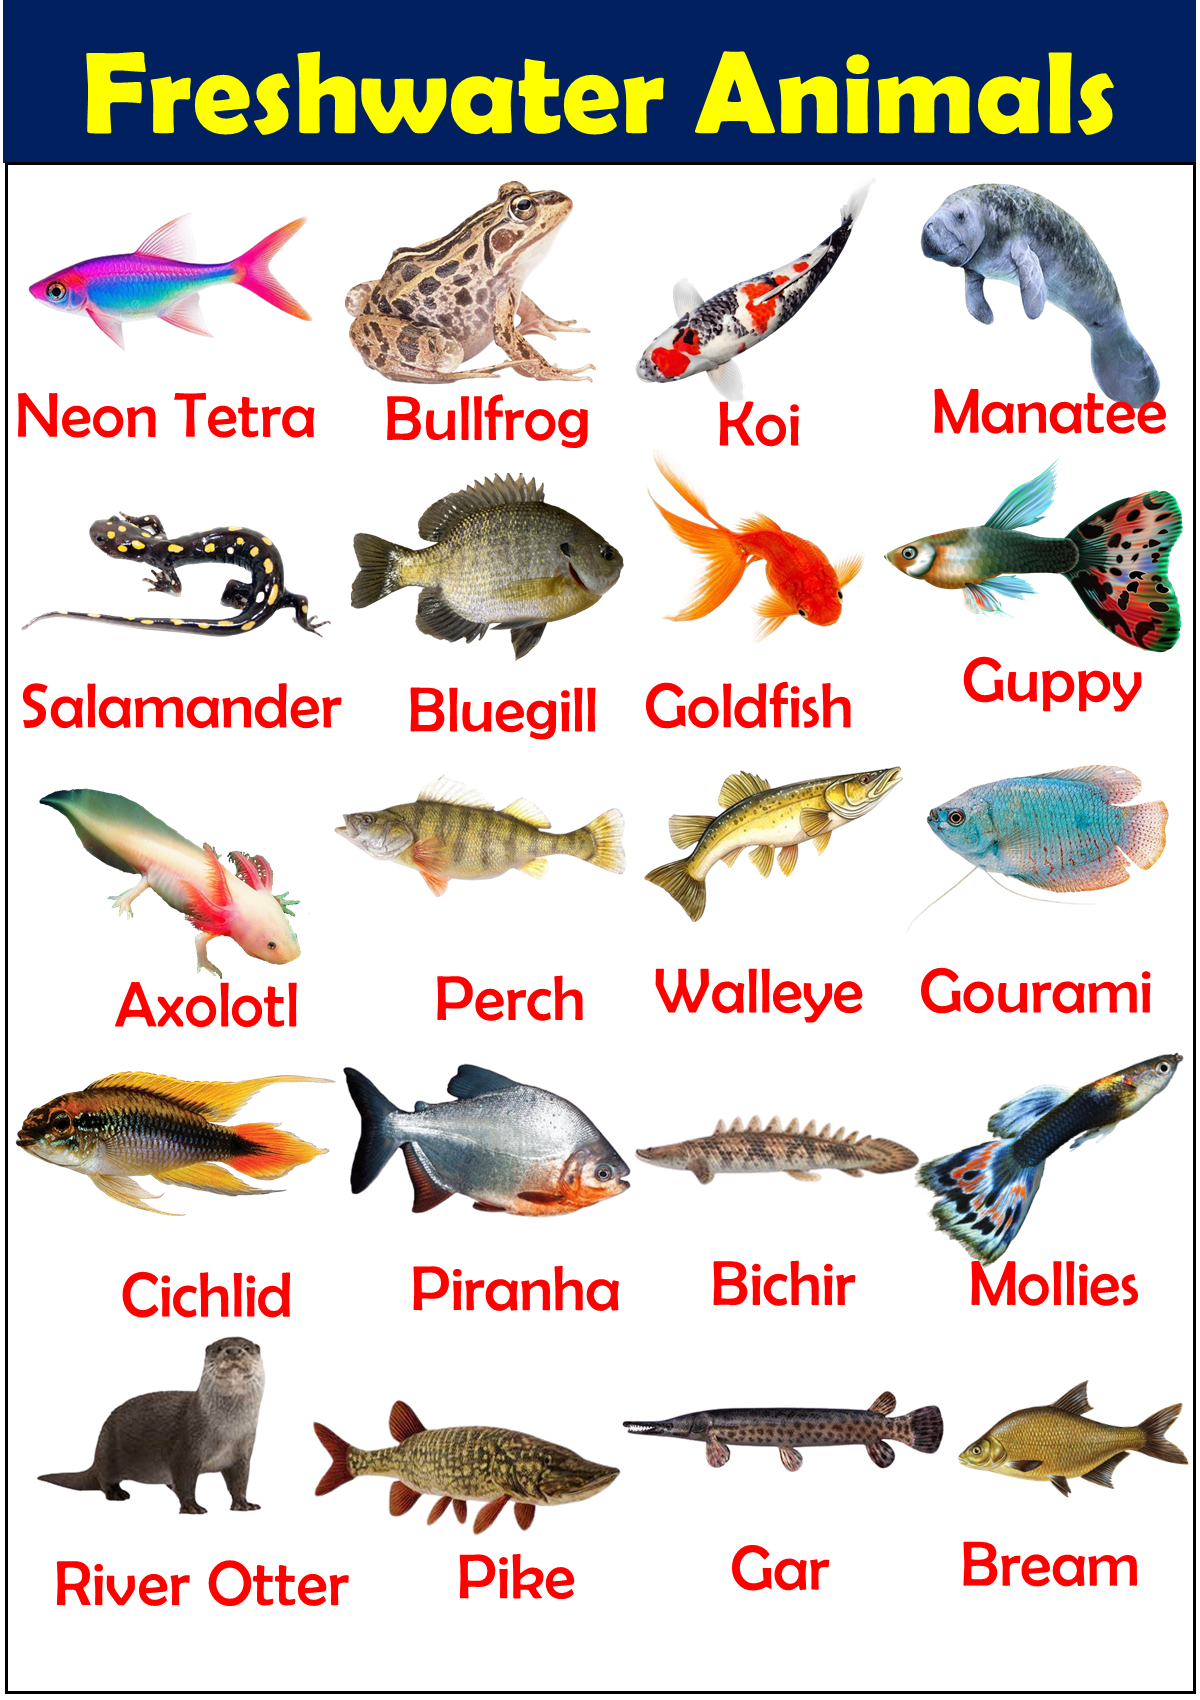 List of Freshwater Animals